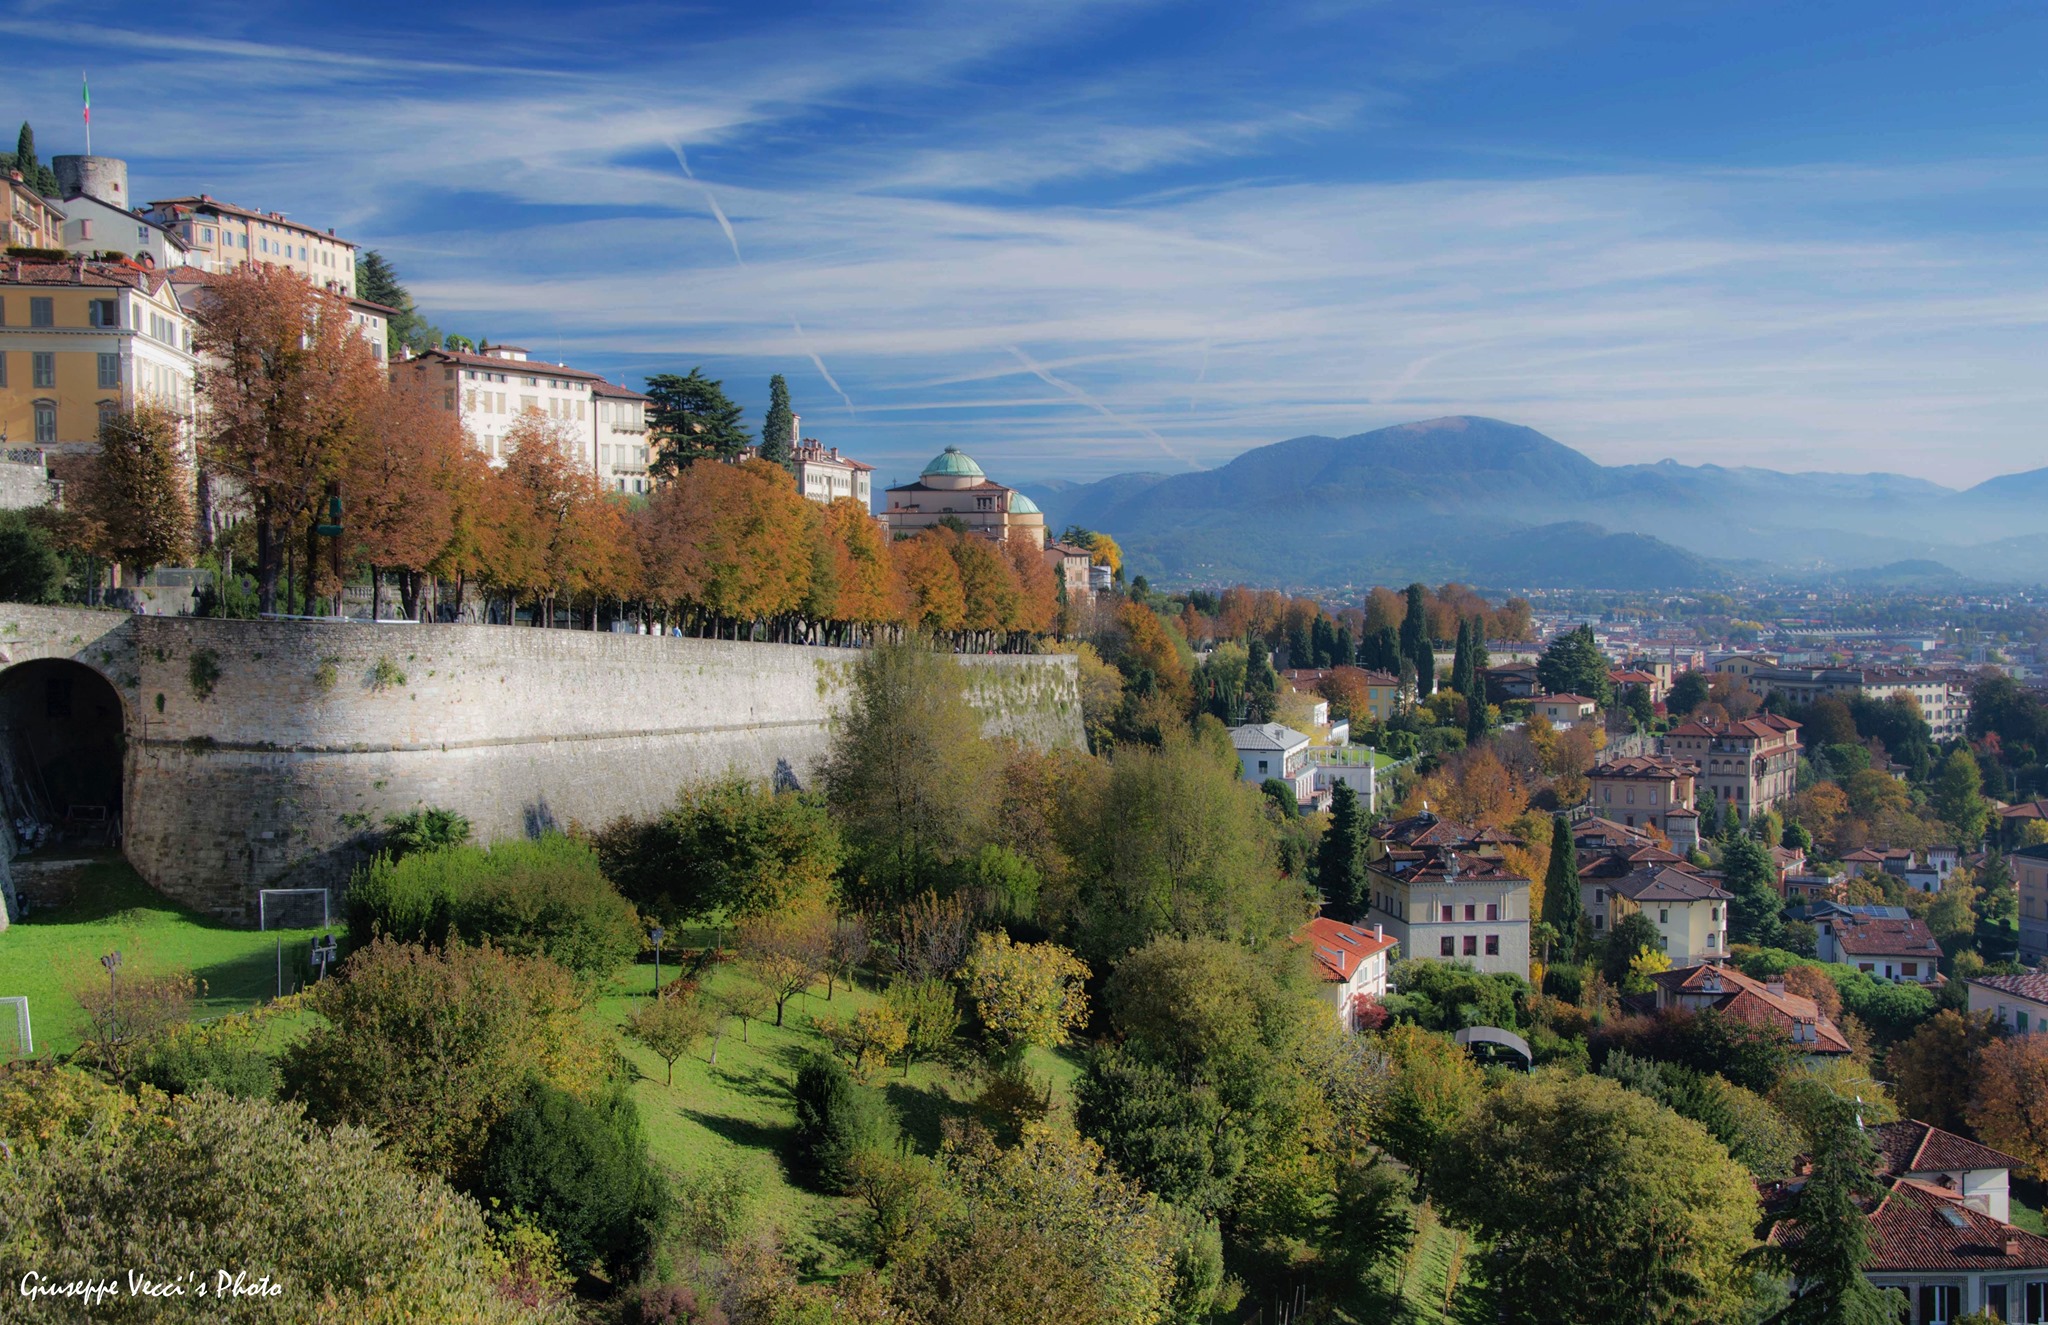 The Venetian Walls Bergamo